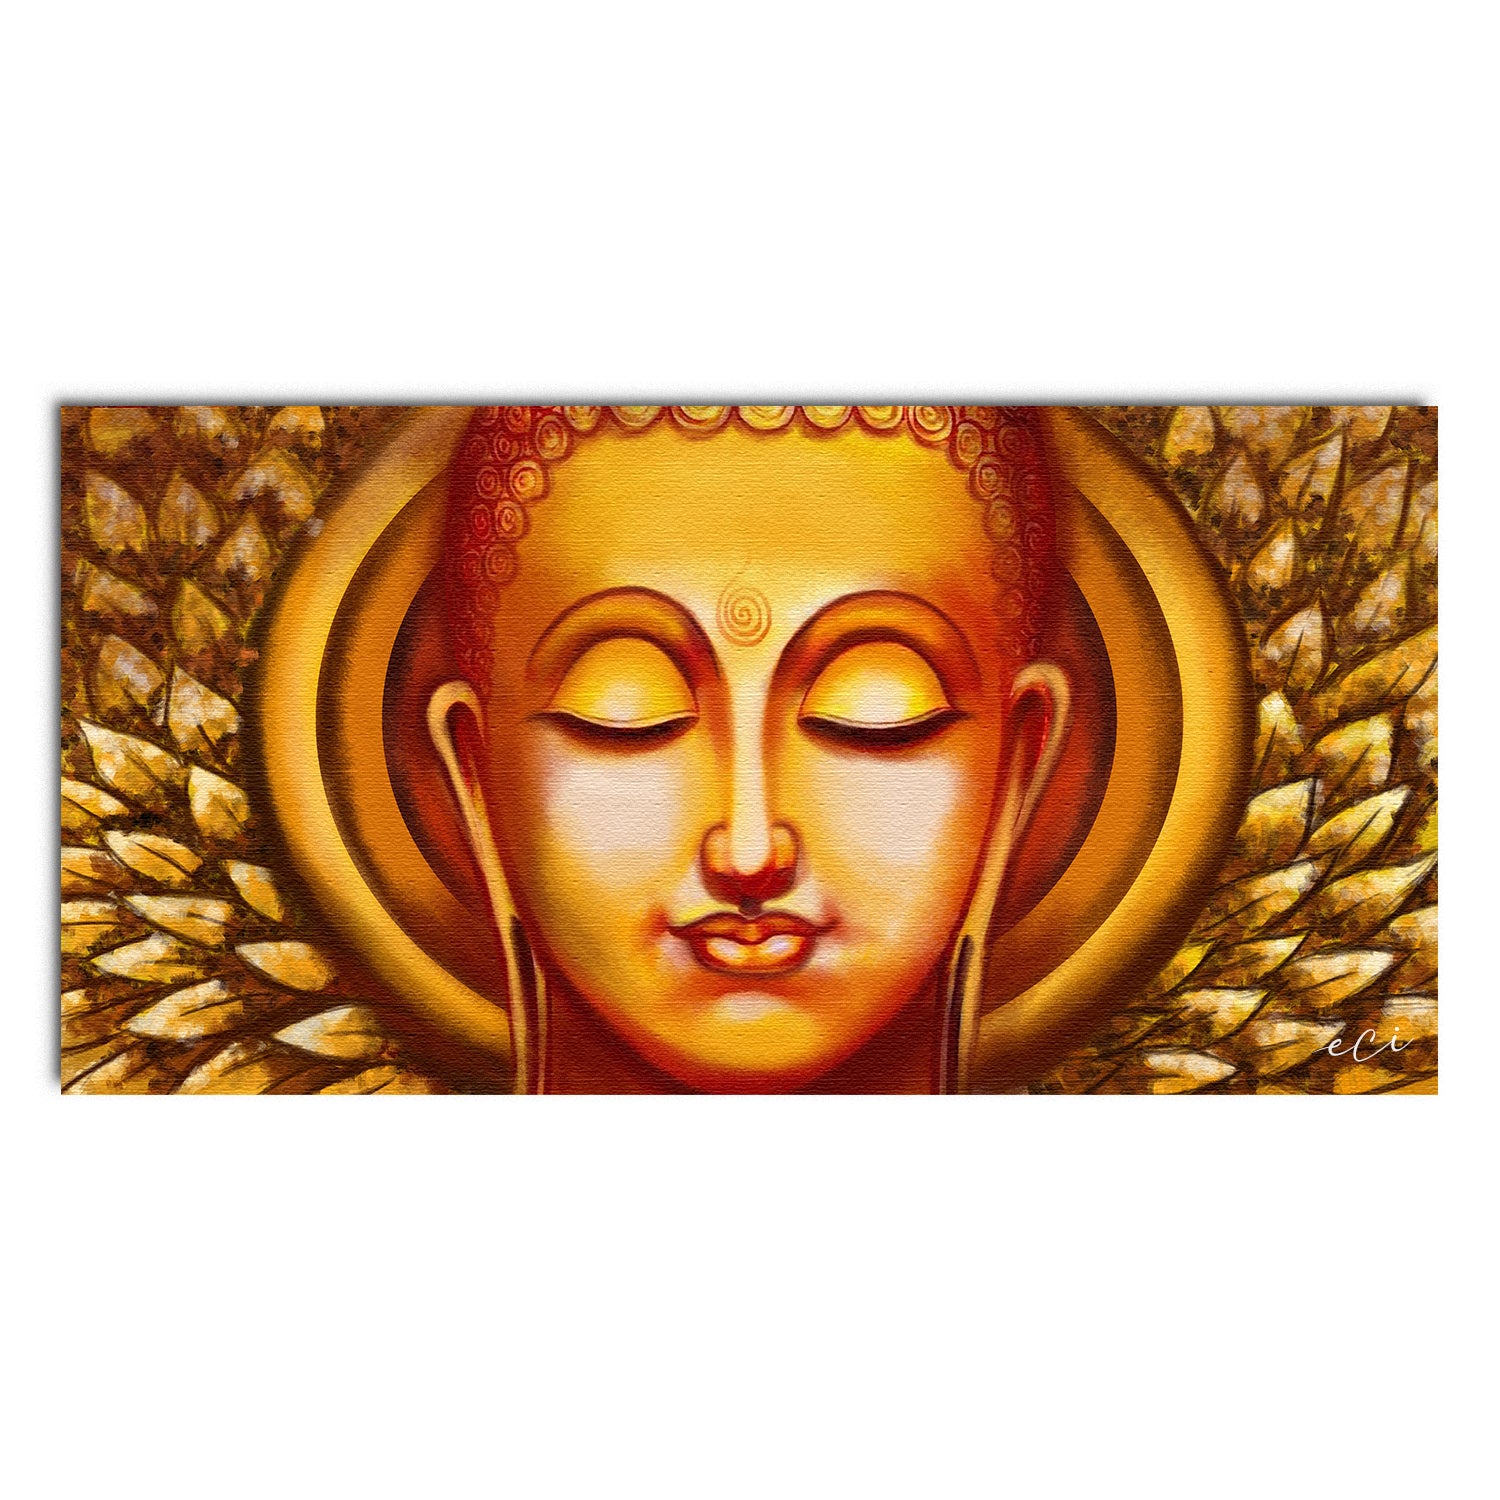 Calm Buddha Face Original Design Canvas Printed Wall Painting